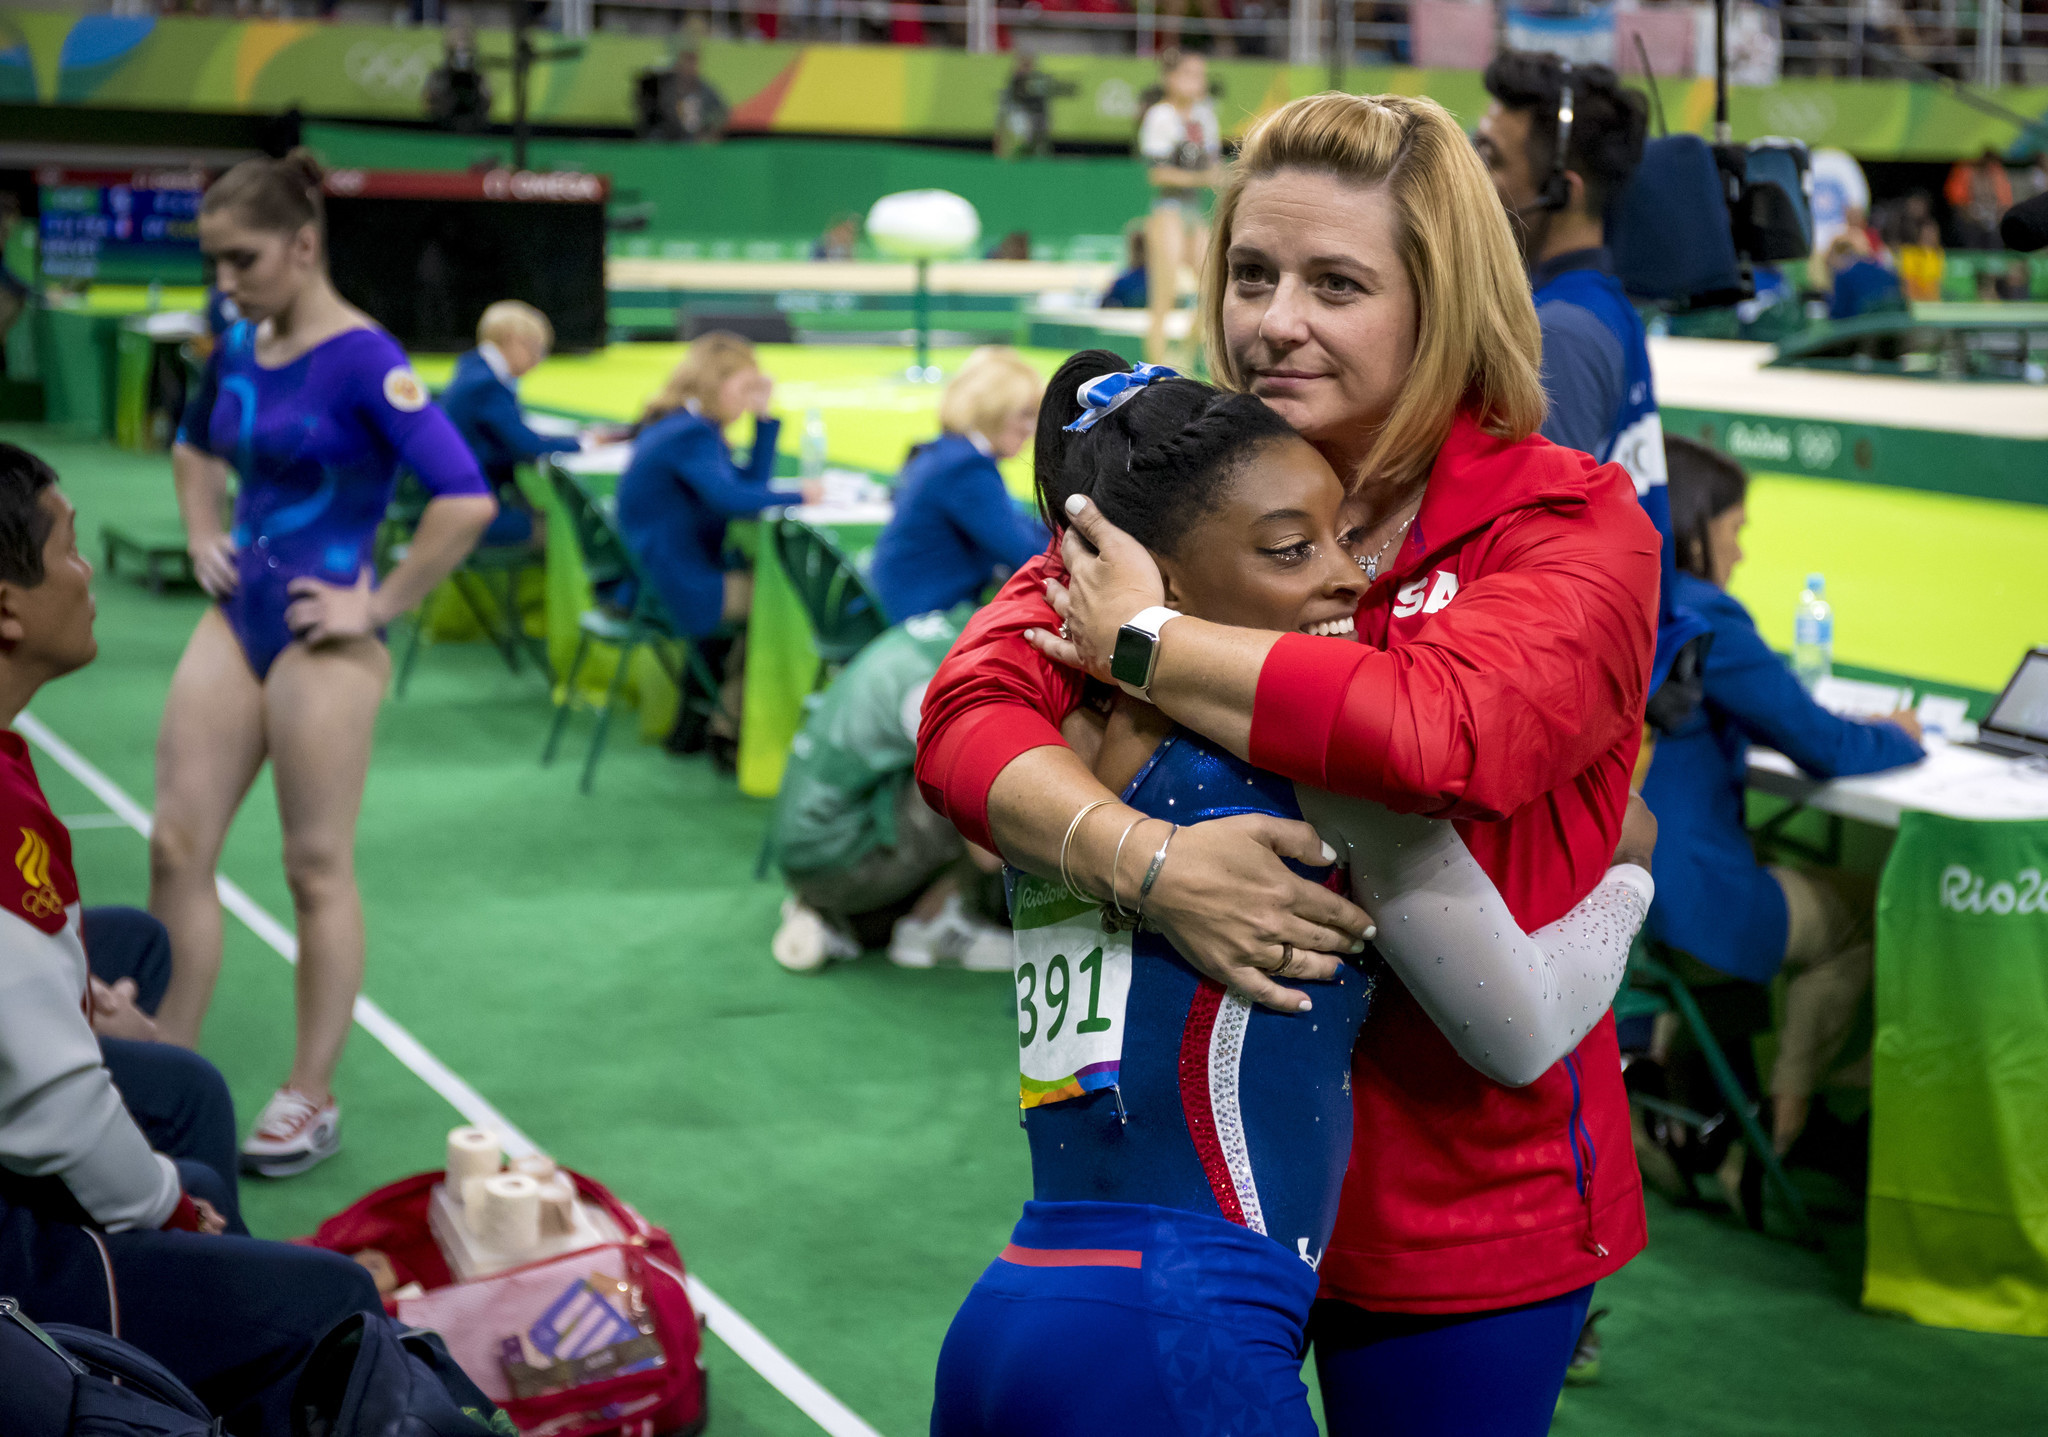 Young Latina Gymnast Laurie Hernandez Earns Spot on U.S. Olympic Team - NBC News